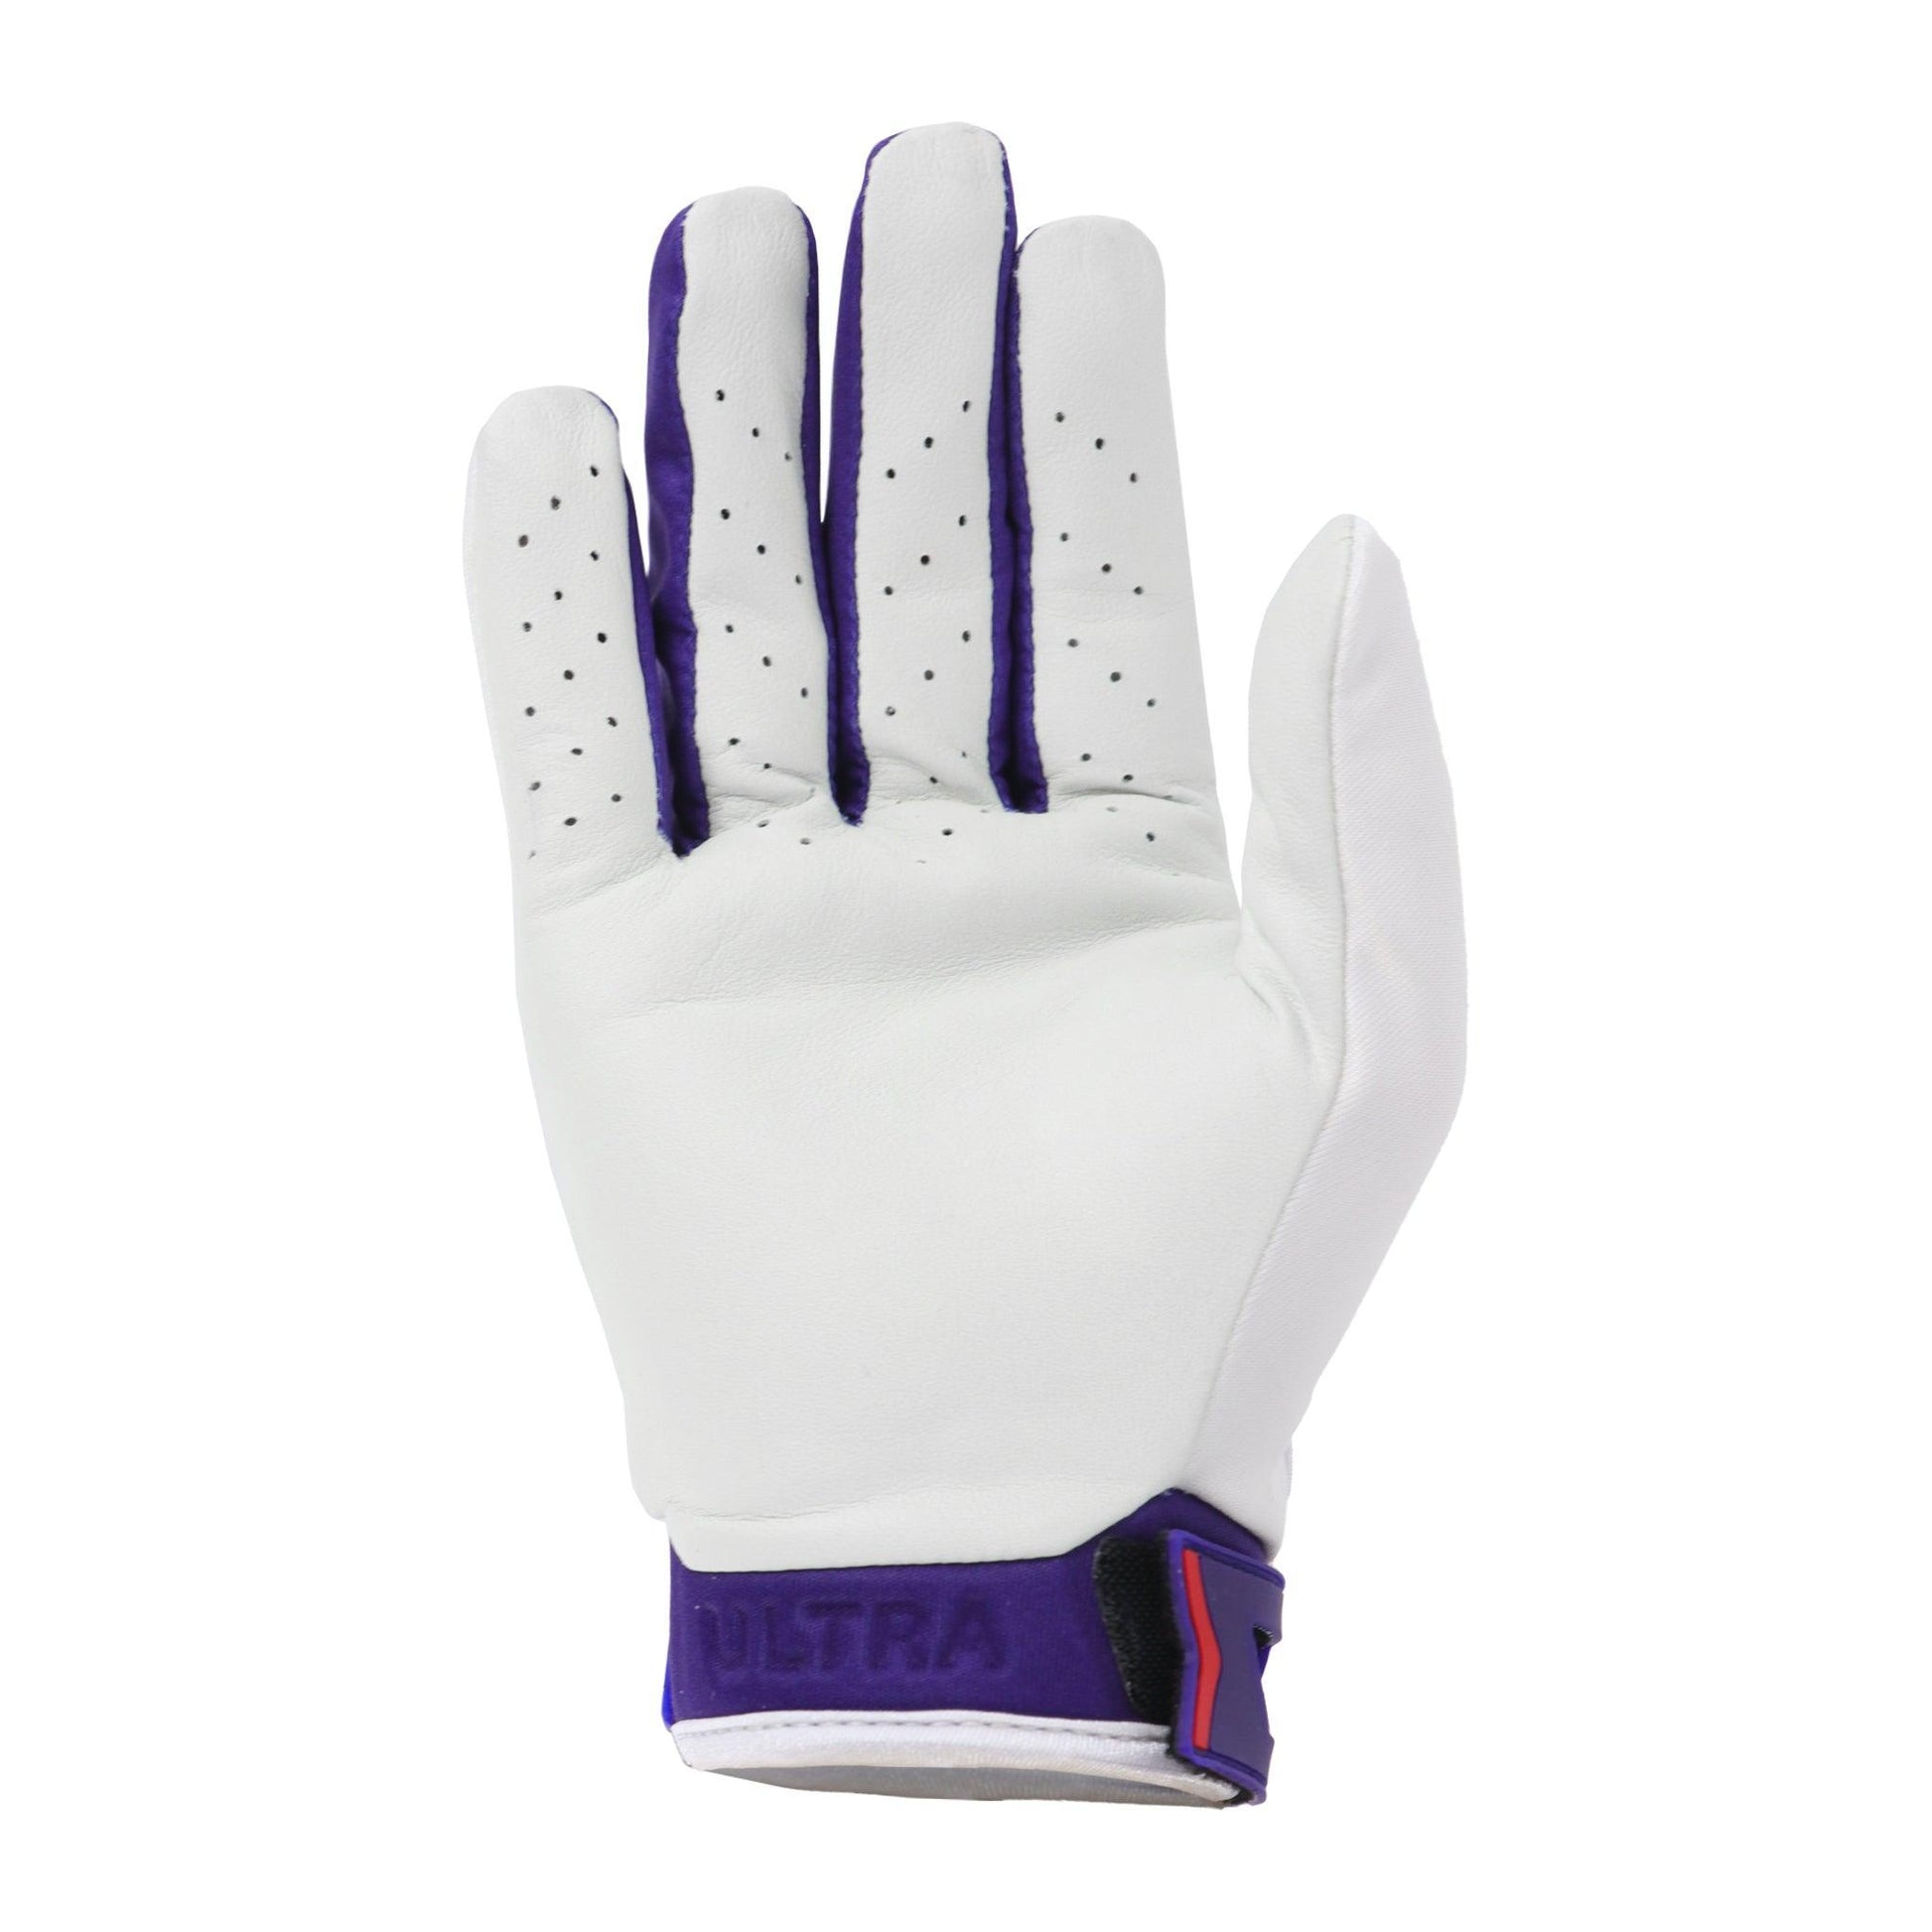 Michelob ULTRA Euforeia Primo Golf Glove - Palm - Right Hand